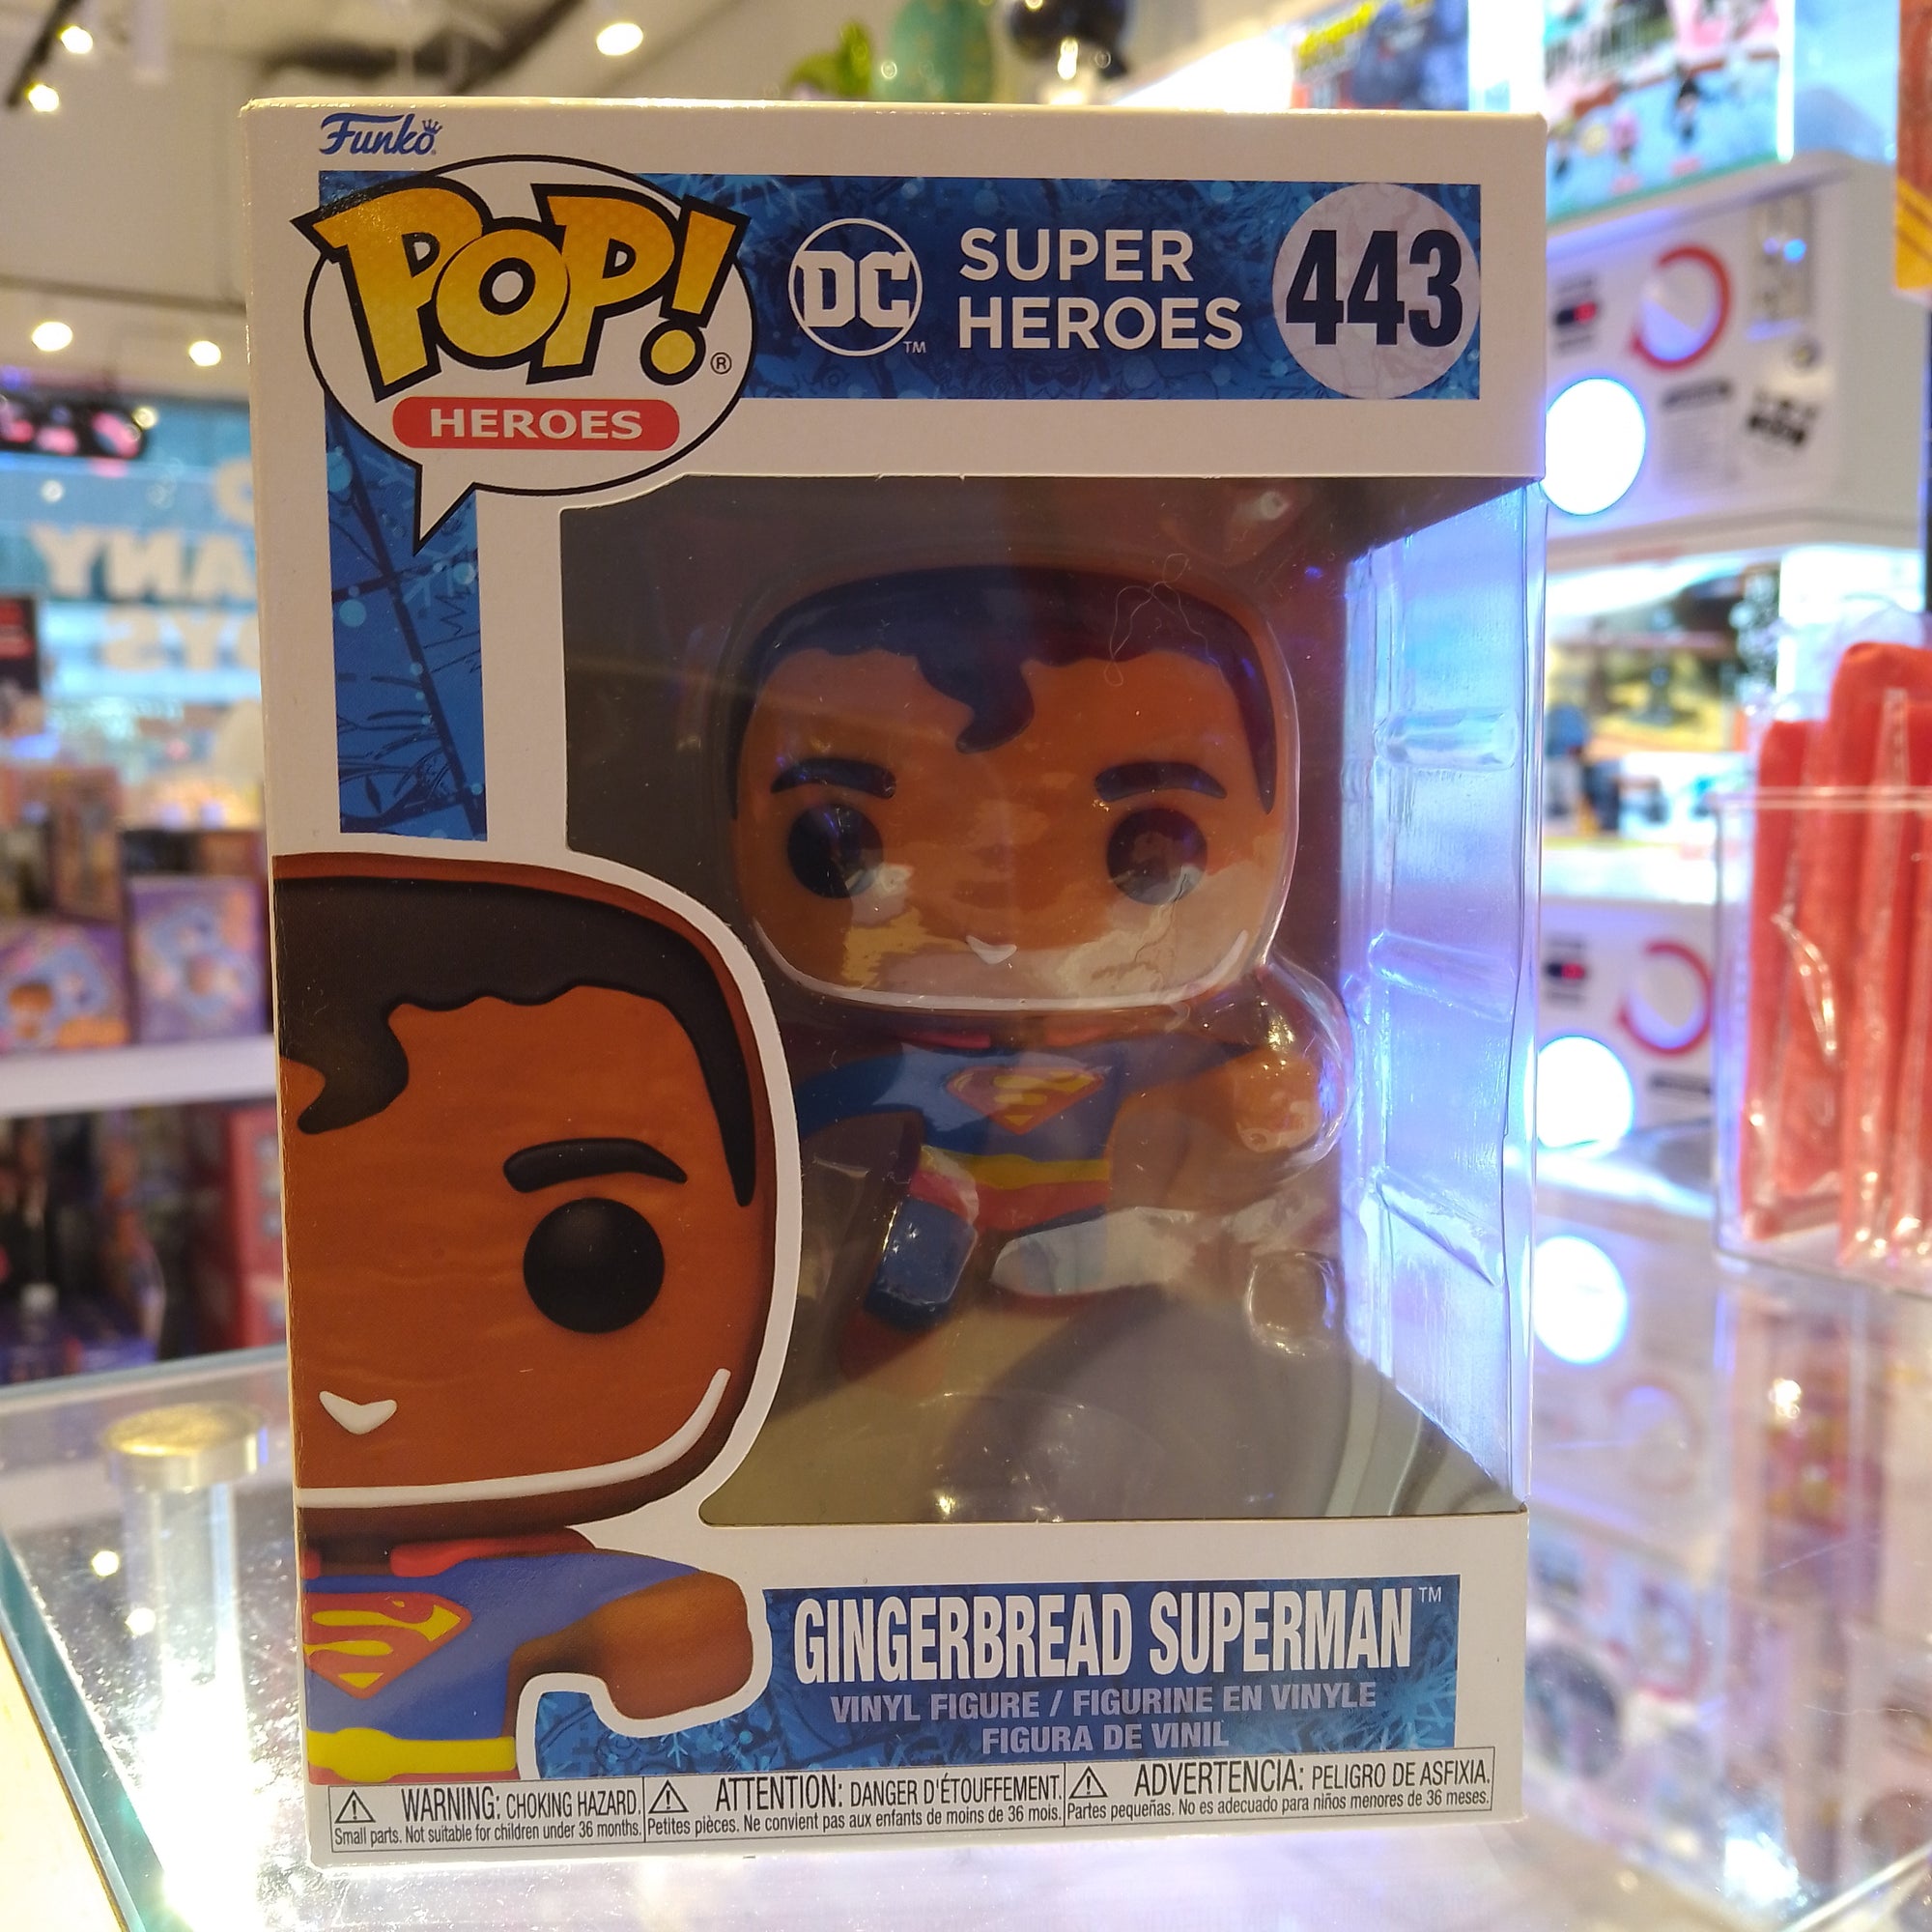 Gingerbread Superman - DC Super Heroes Funko POP! by Funko